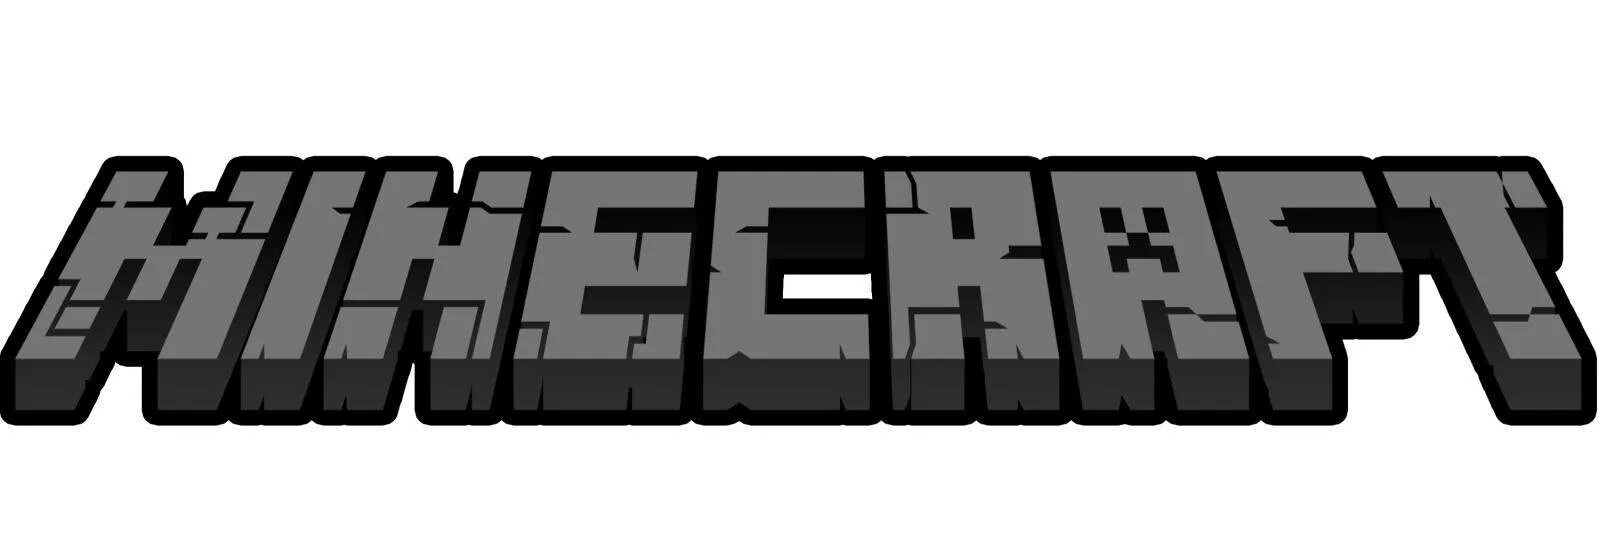 Minecraft logo png. Майнкрафт. Minecraft без фона. Майнкрафт надпись. Майнкрафт на прозрачном фоне.